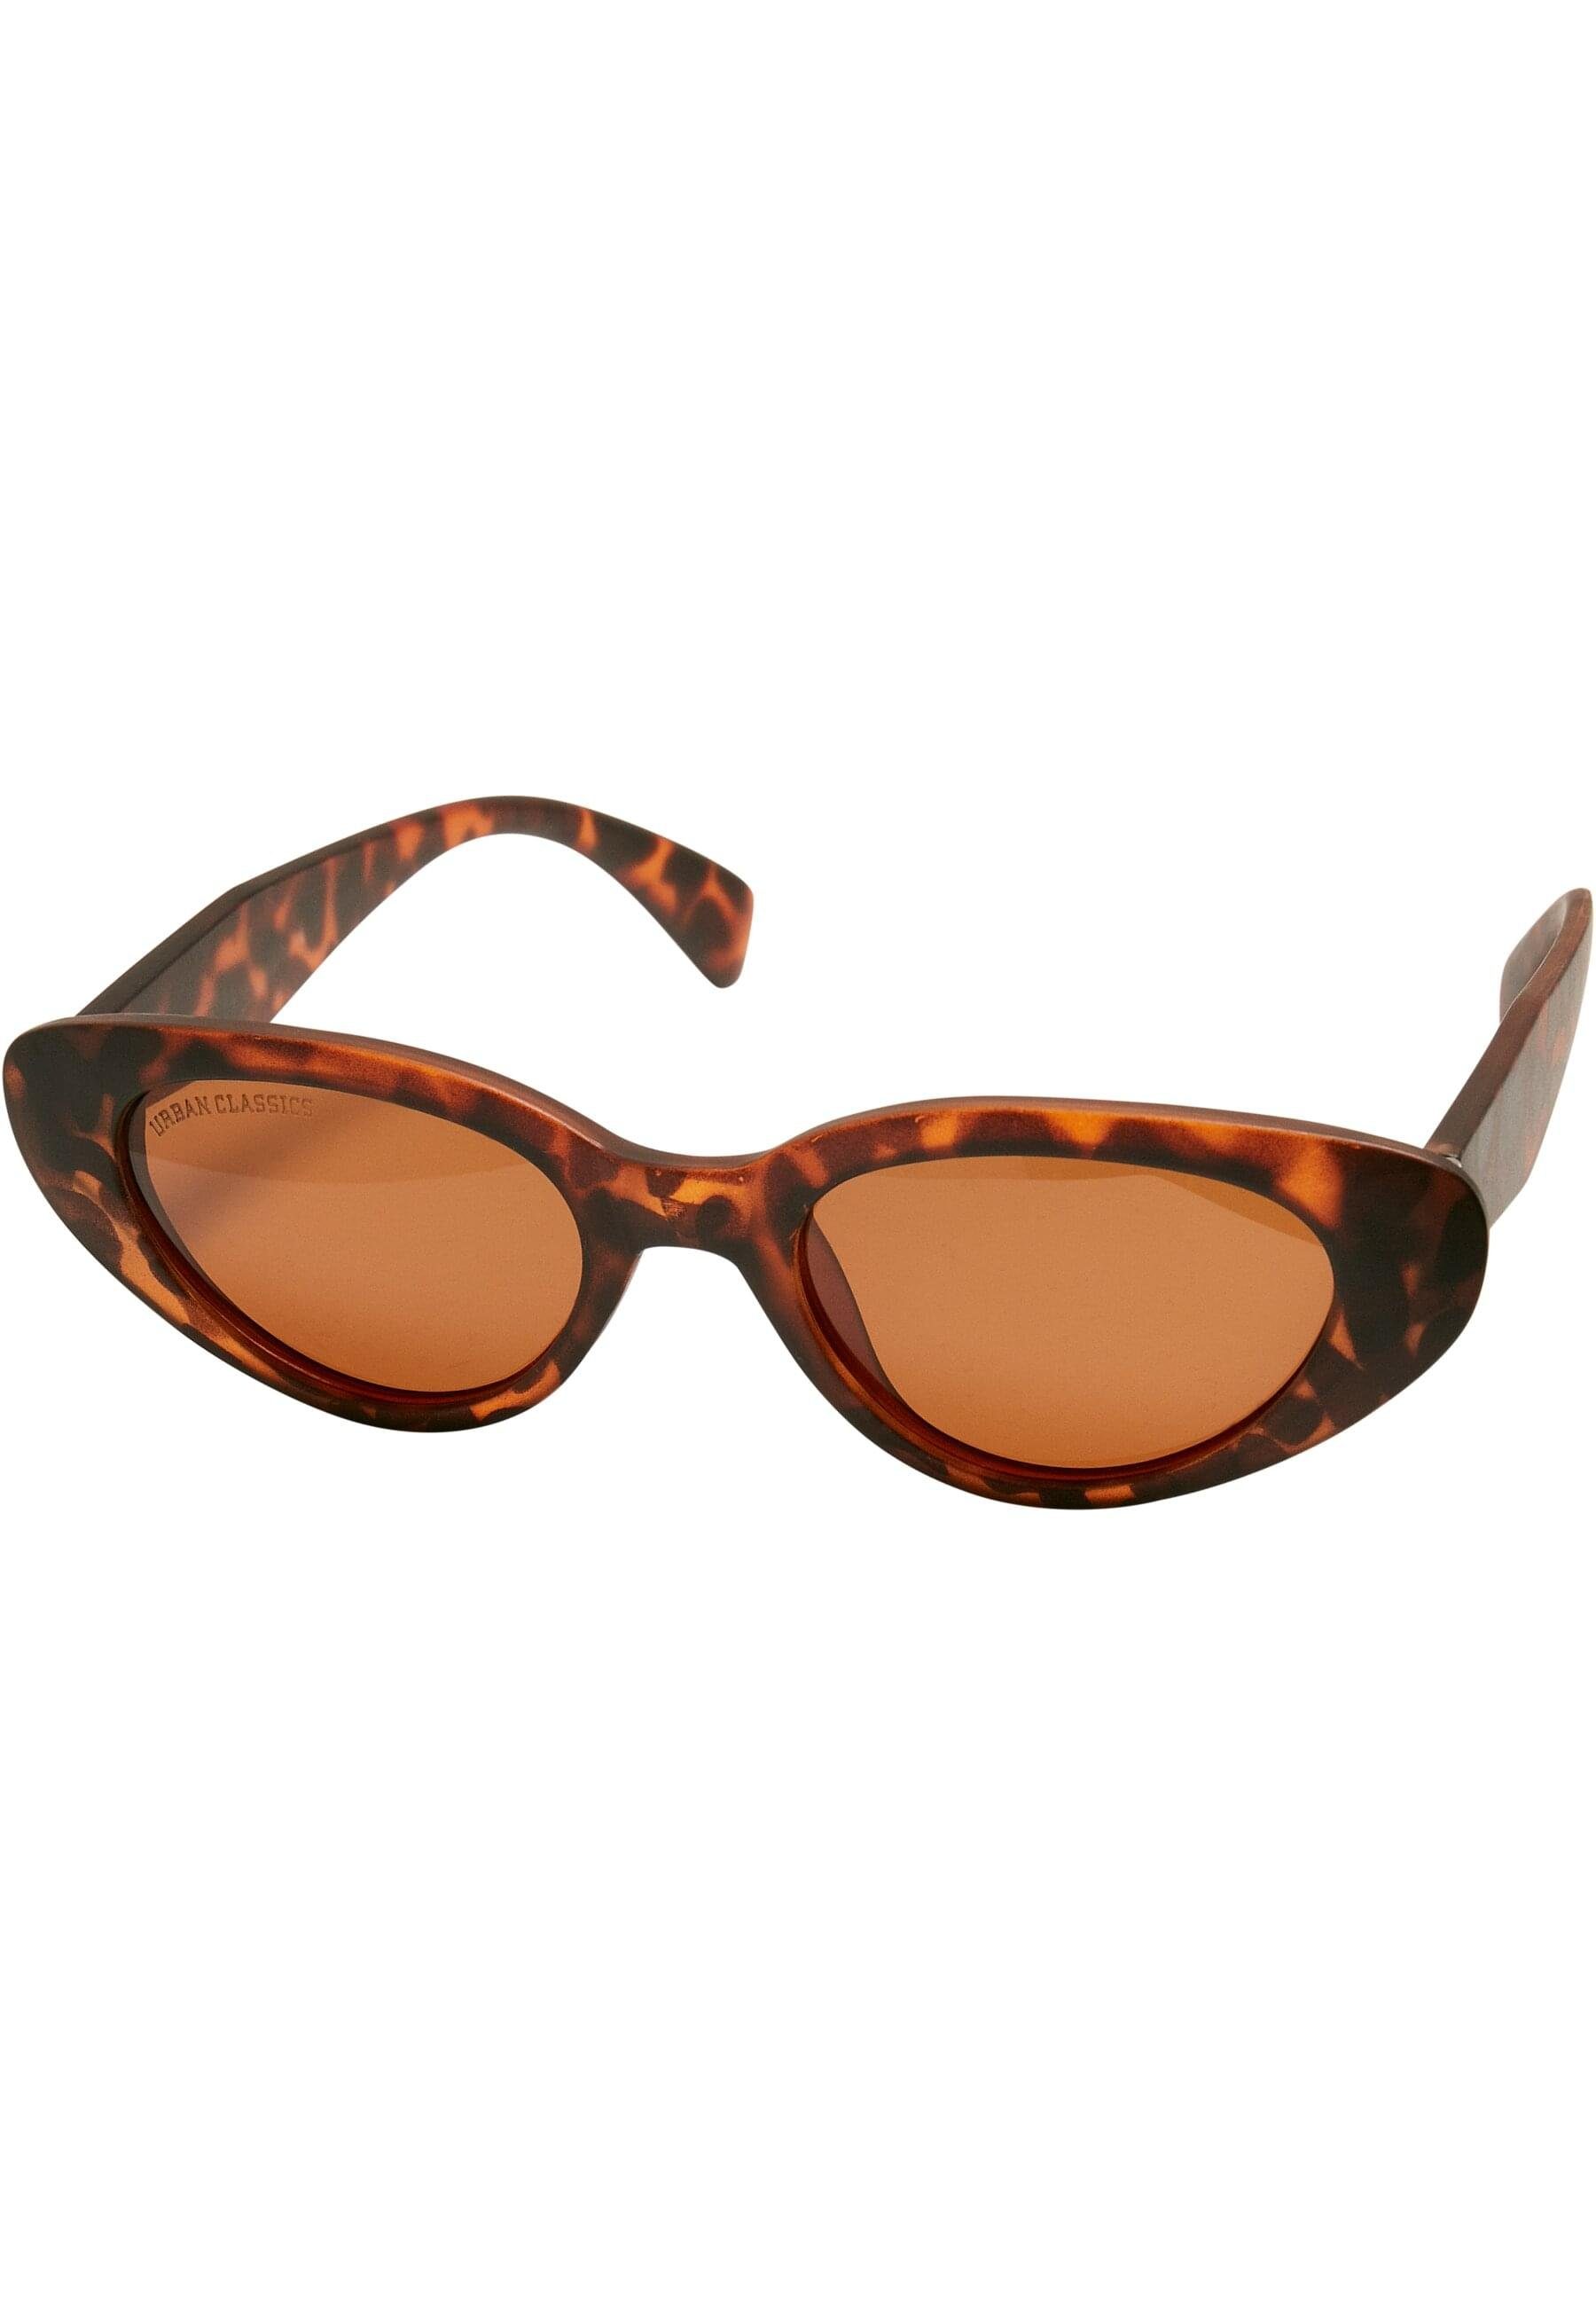 Sunglasses Puerto URBAN Chain brown Rico Unisex CLASSICS With Sonnenbrille